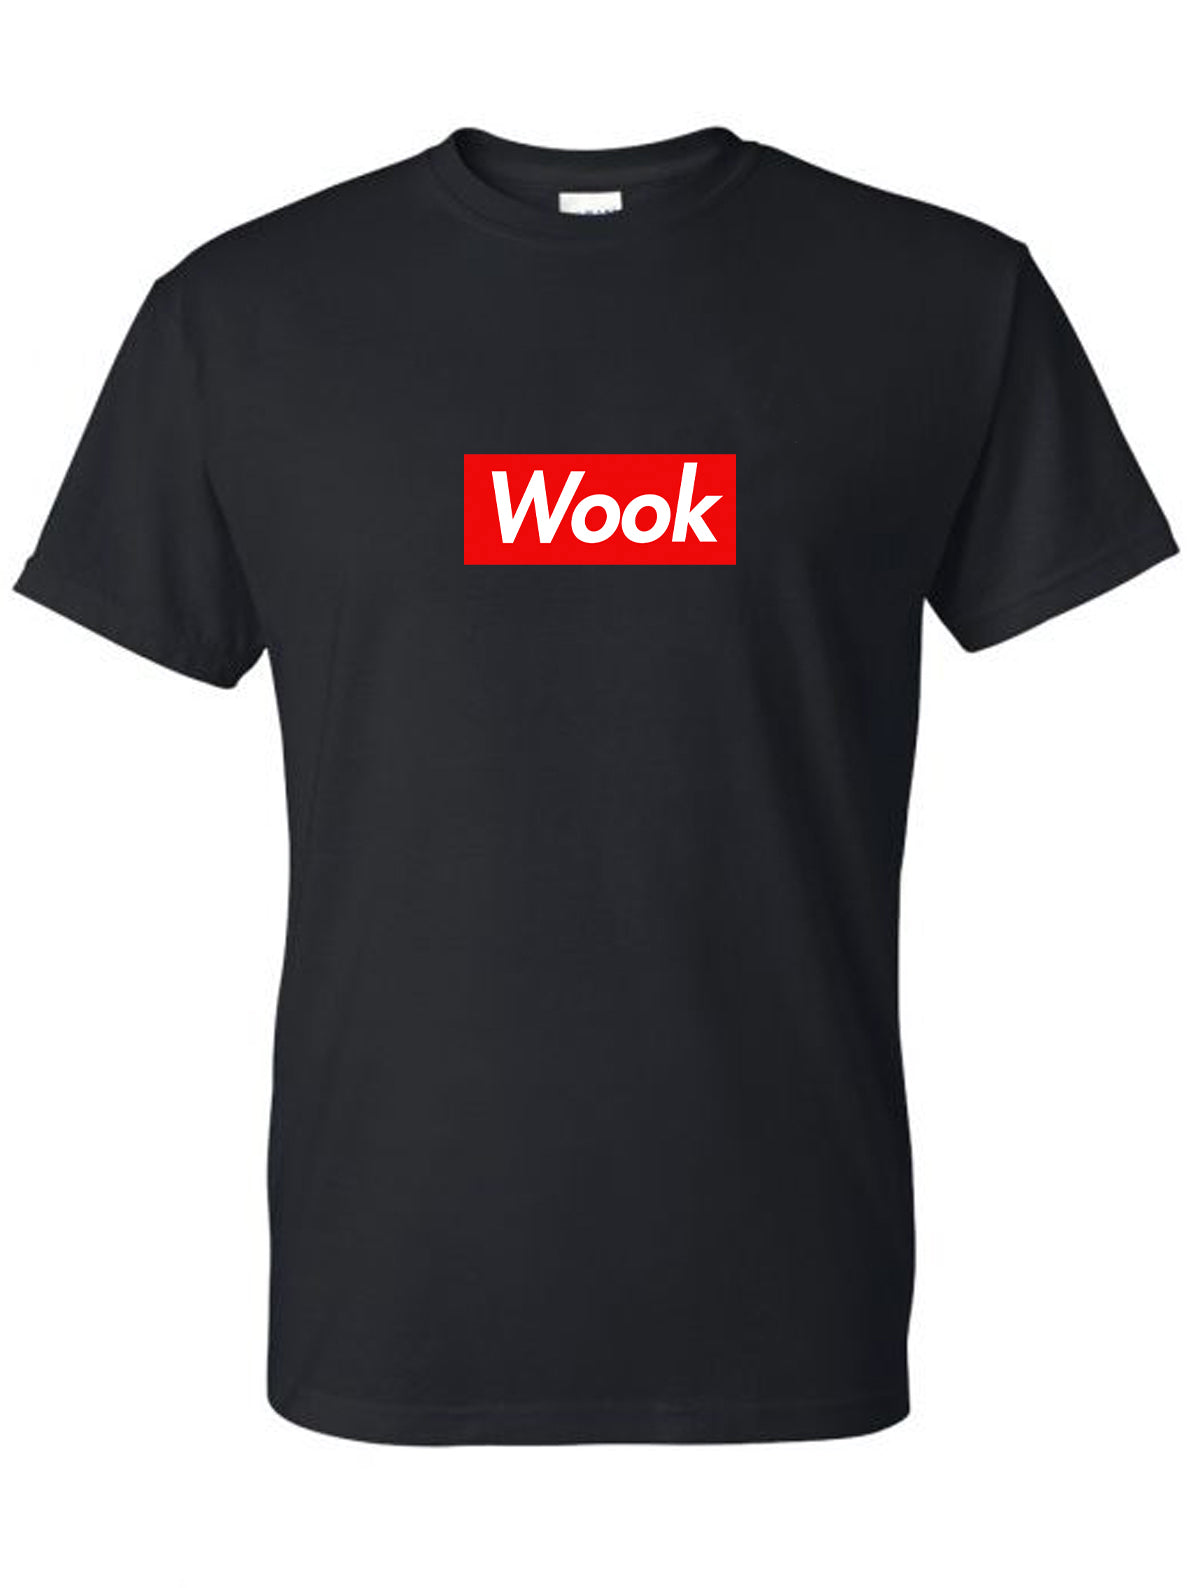 "Wook" Shirts